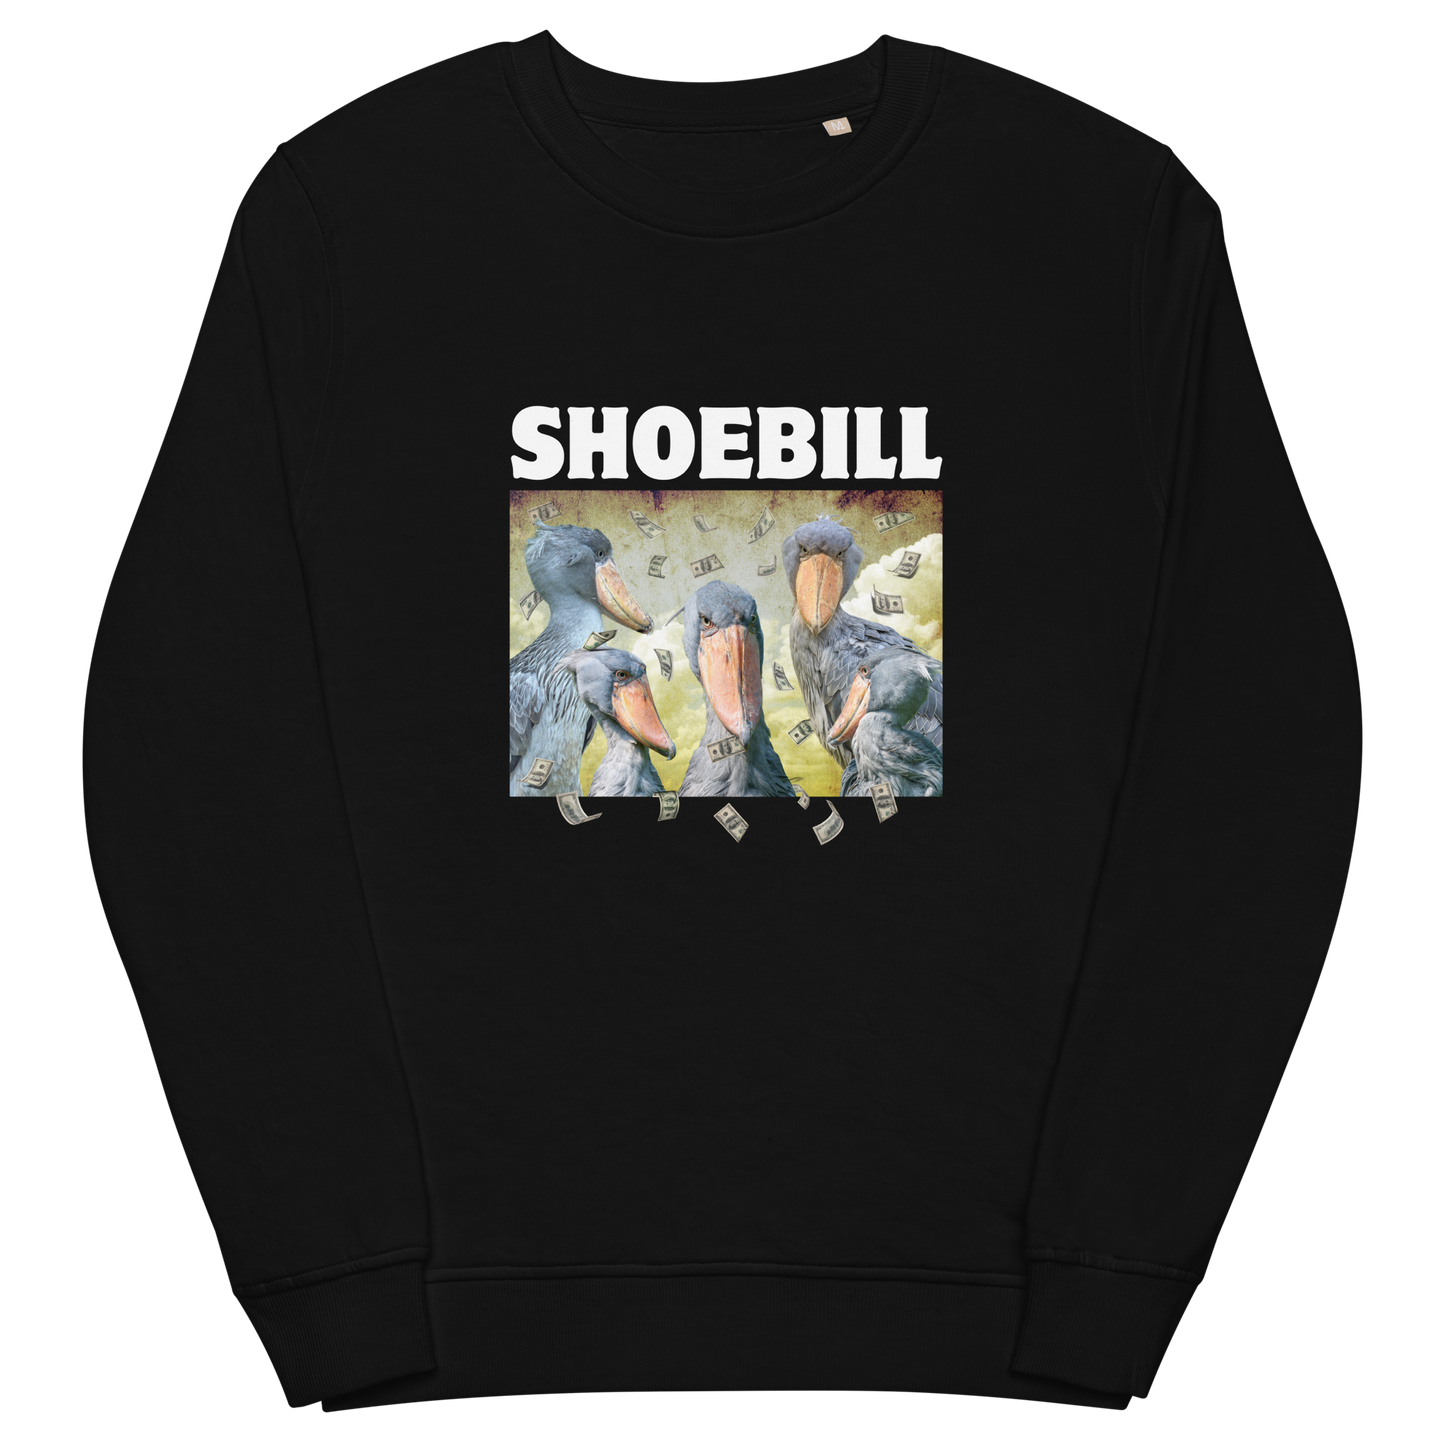 Black Shoebill Organic Sweatshirt featuring a cool Shoebill graphic on the chest - ArtsyFunny Graphic Shoebill Stork Sweatshirts - Boozy Fox